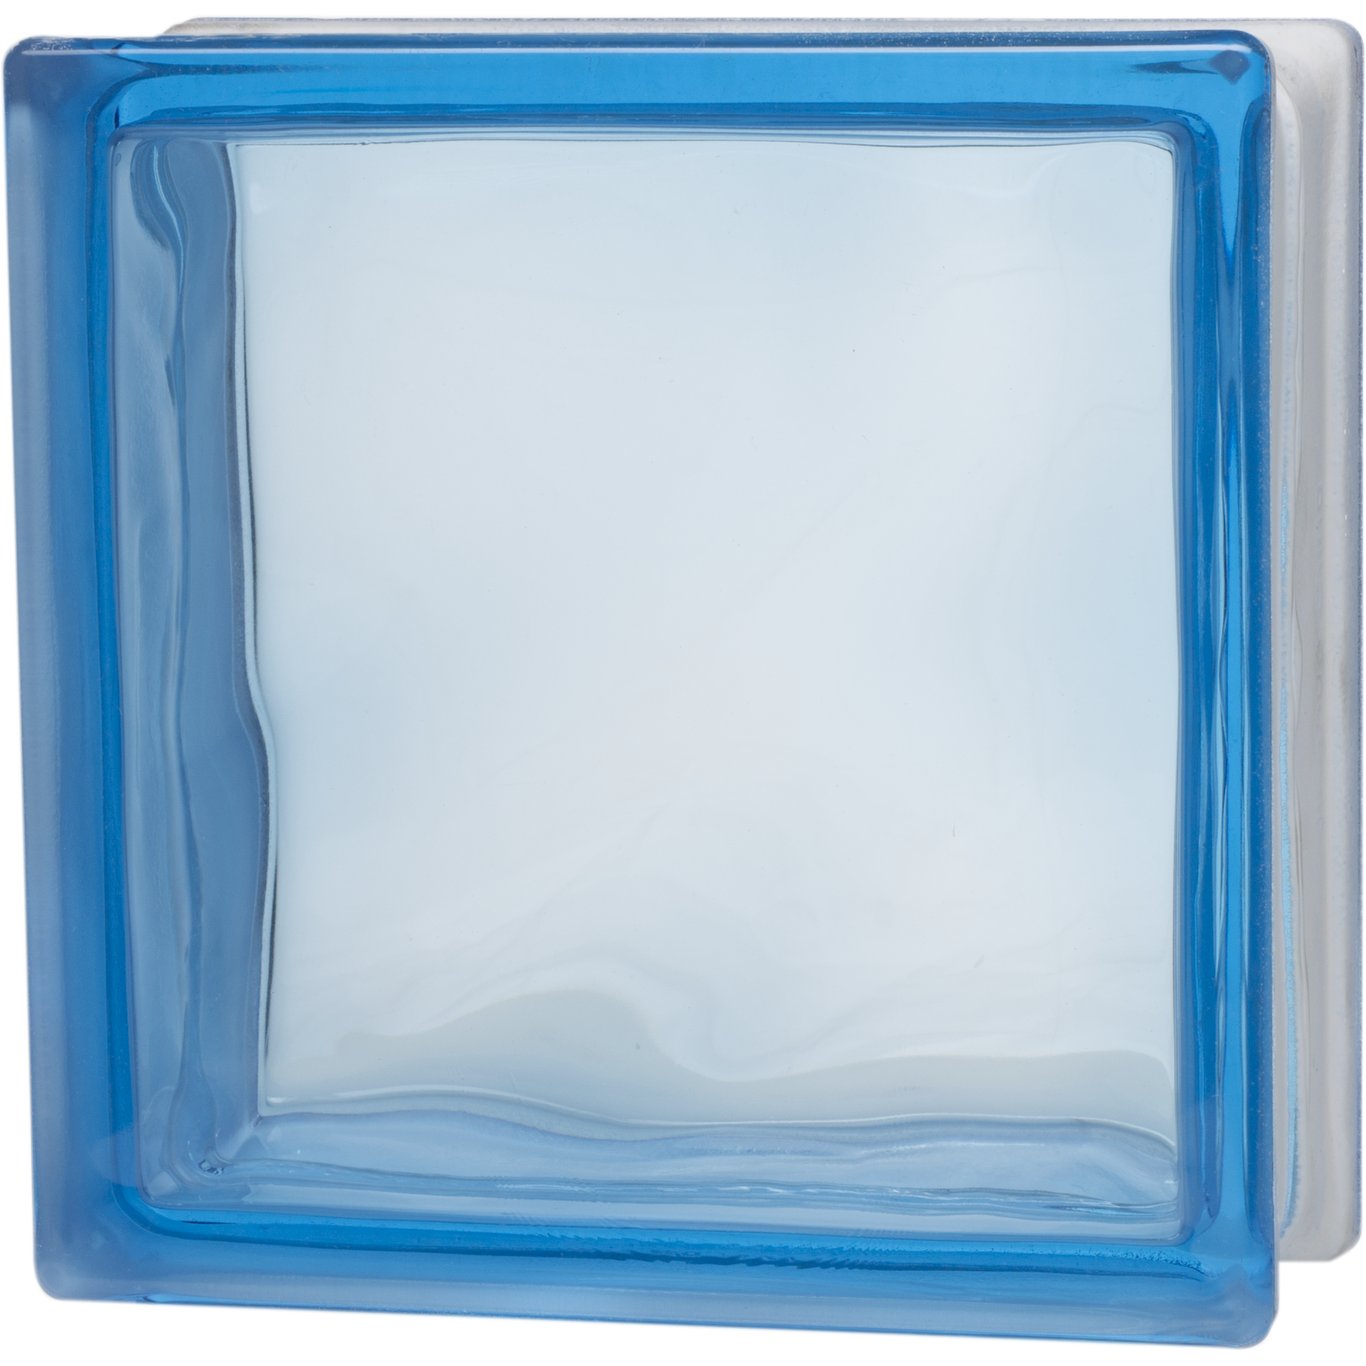 GLASS BLOCK - CLOUDY BLUE